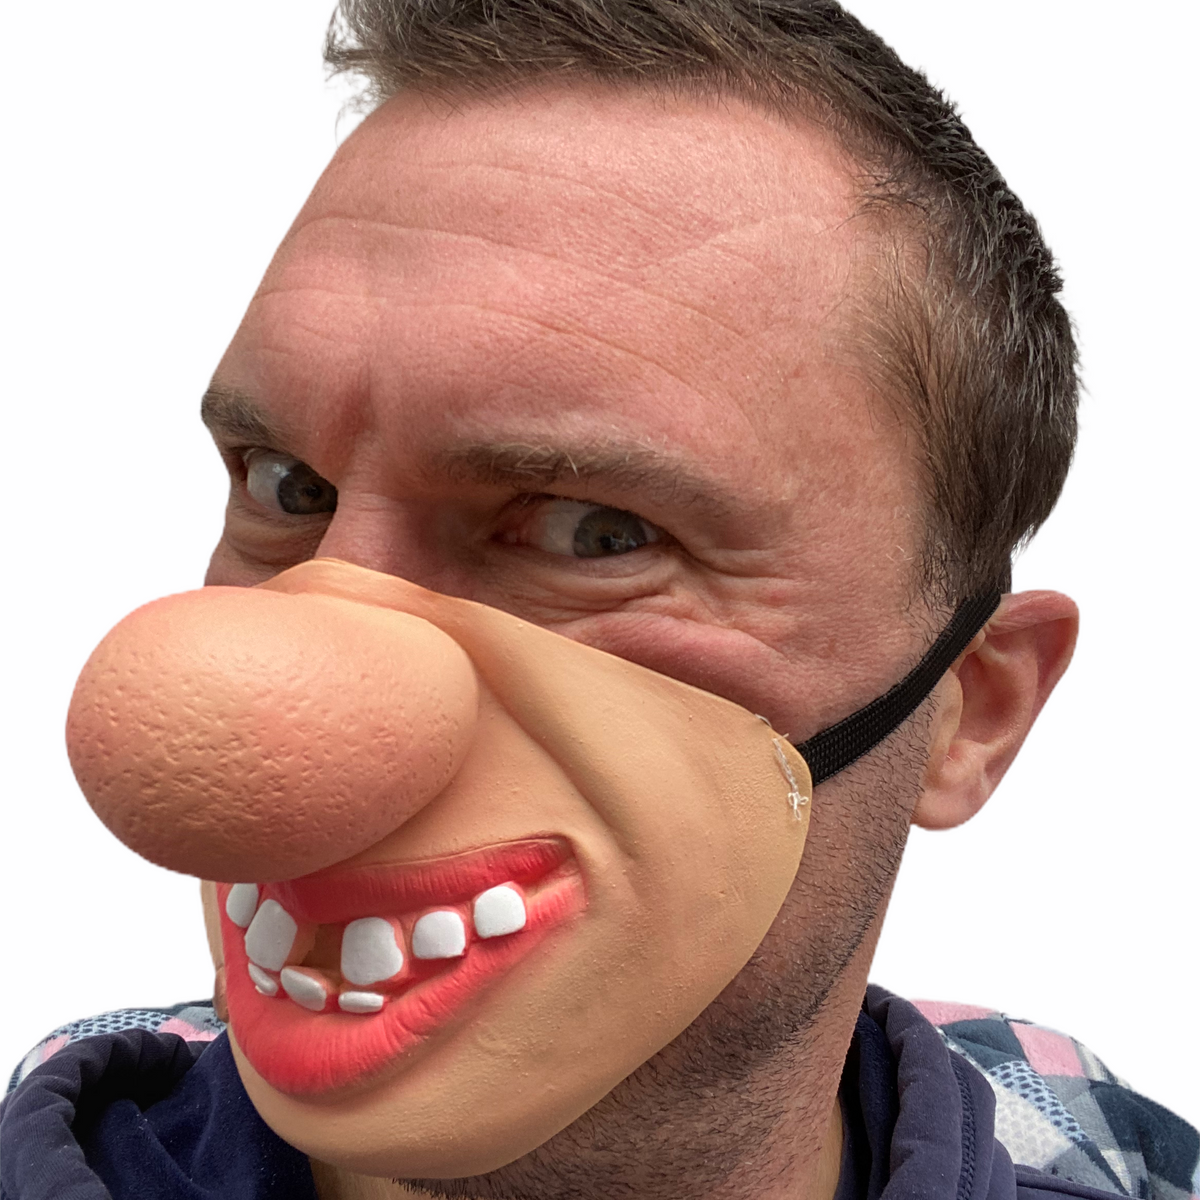 Big Nose Clown Half Face Mask